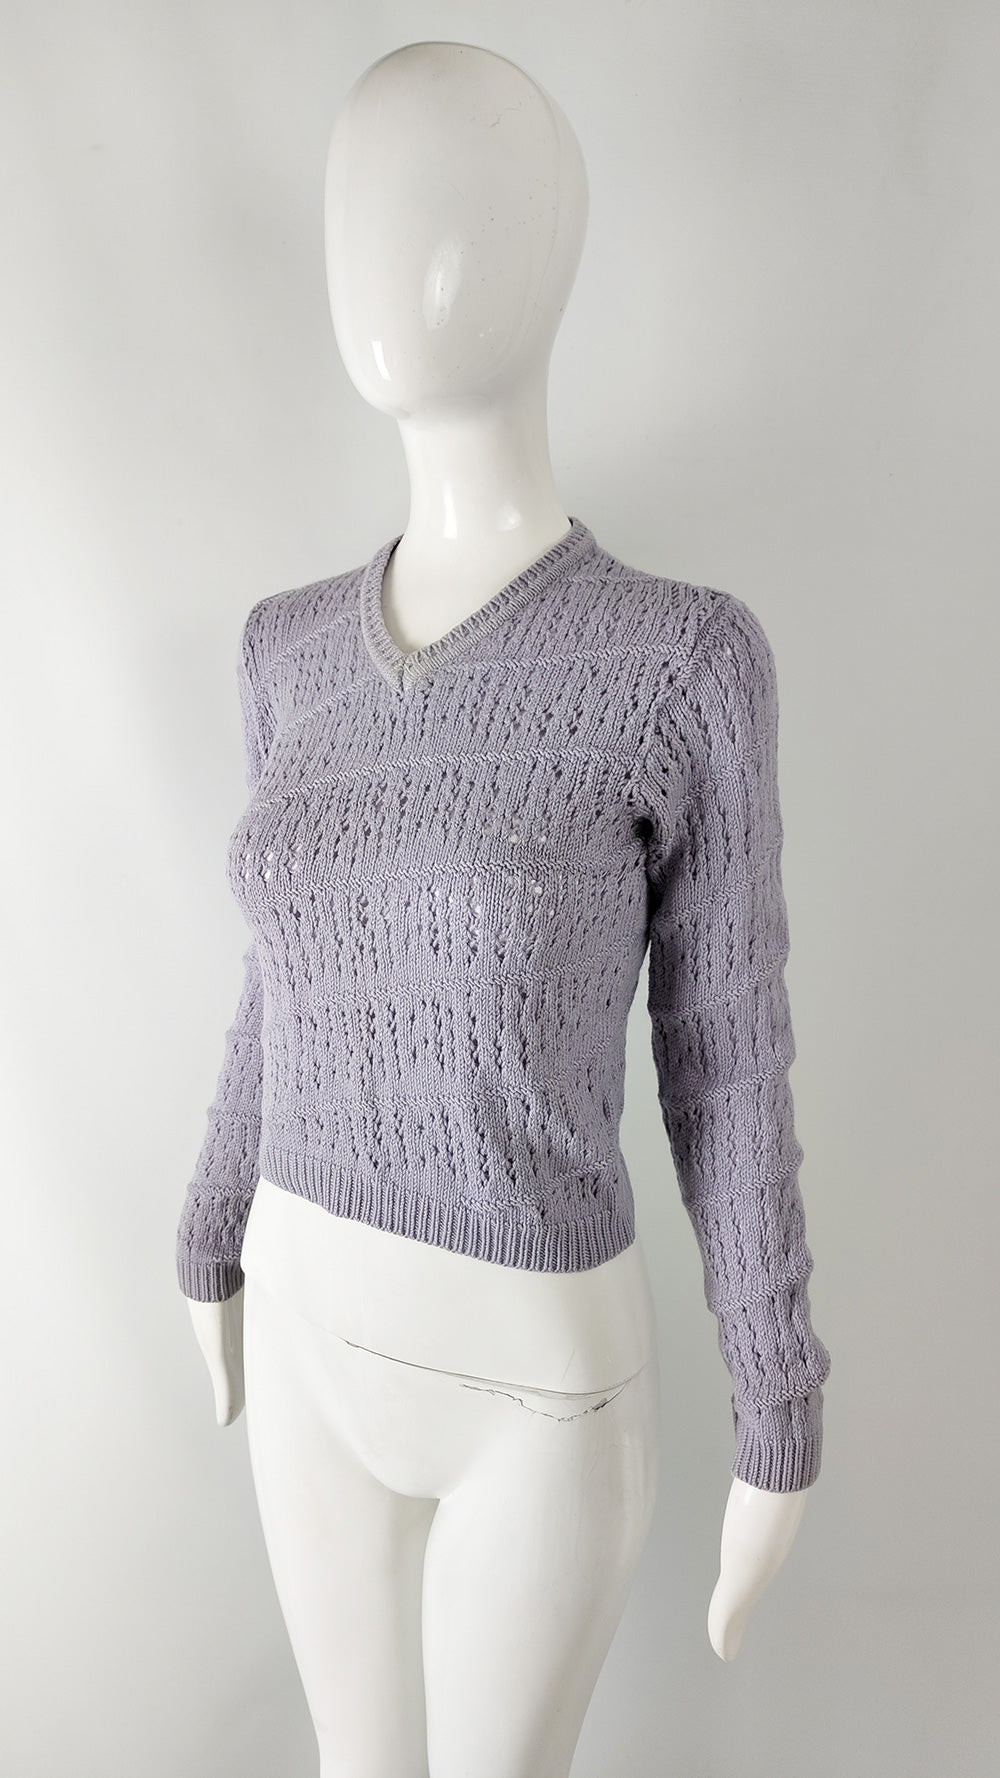 Versus Versace Vintage Lavender Twisted Knit Sweater, 1990s